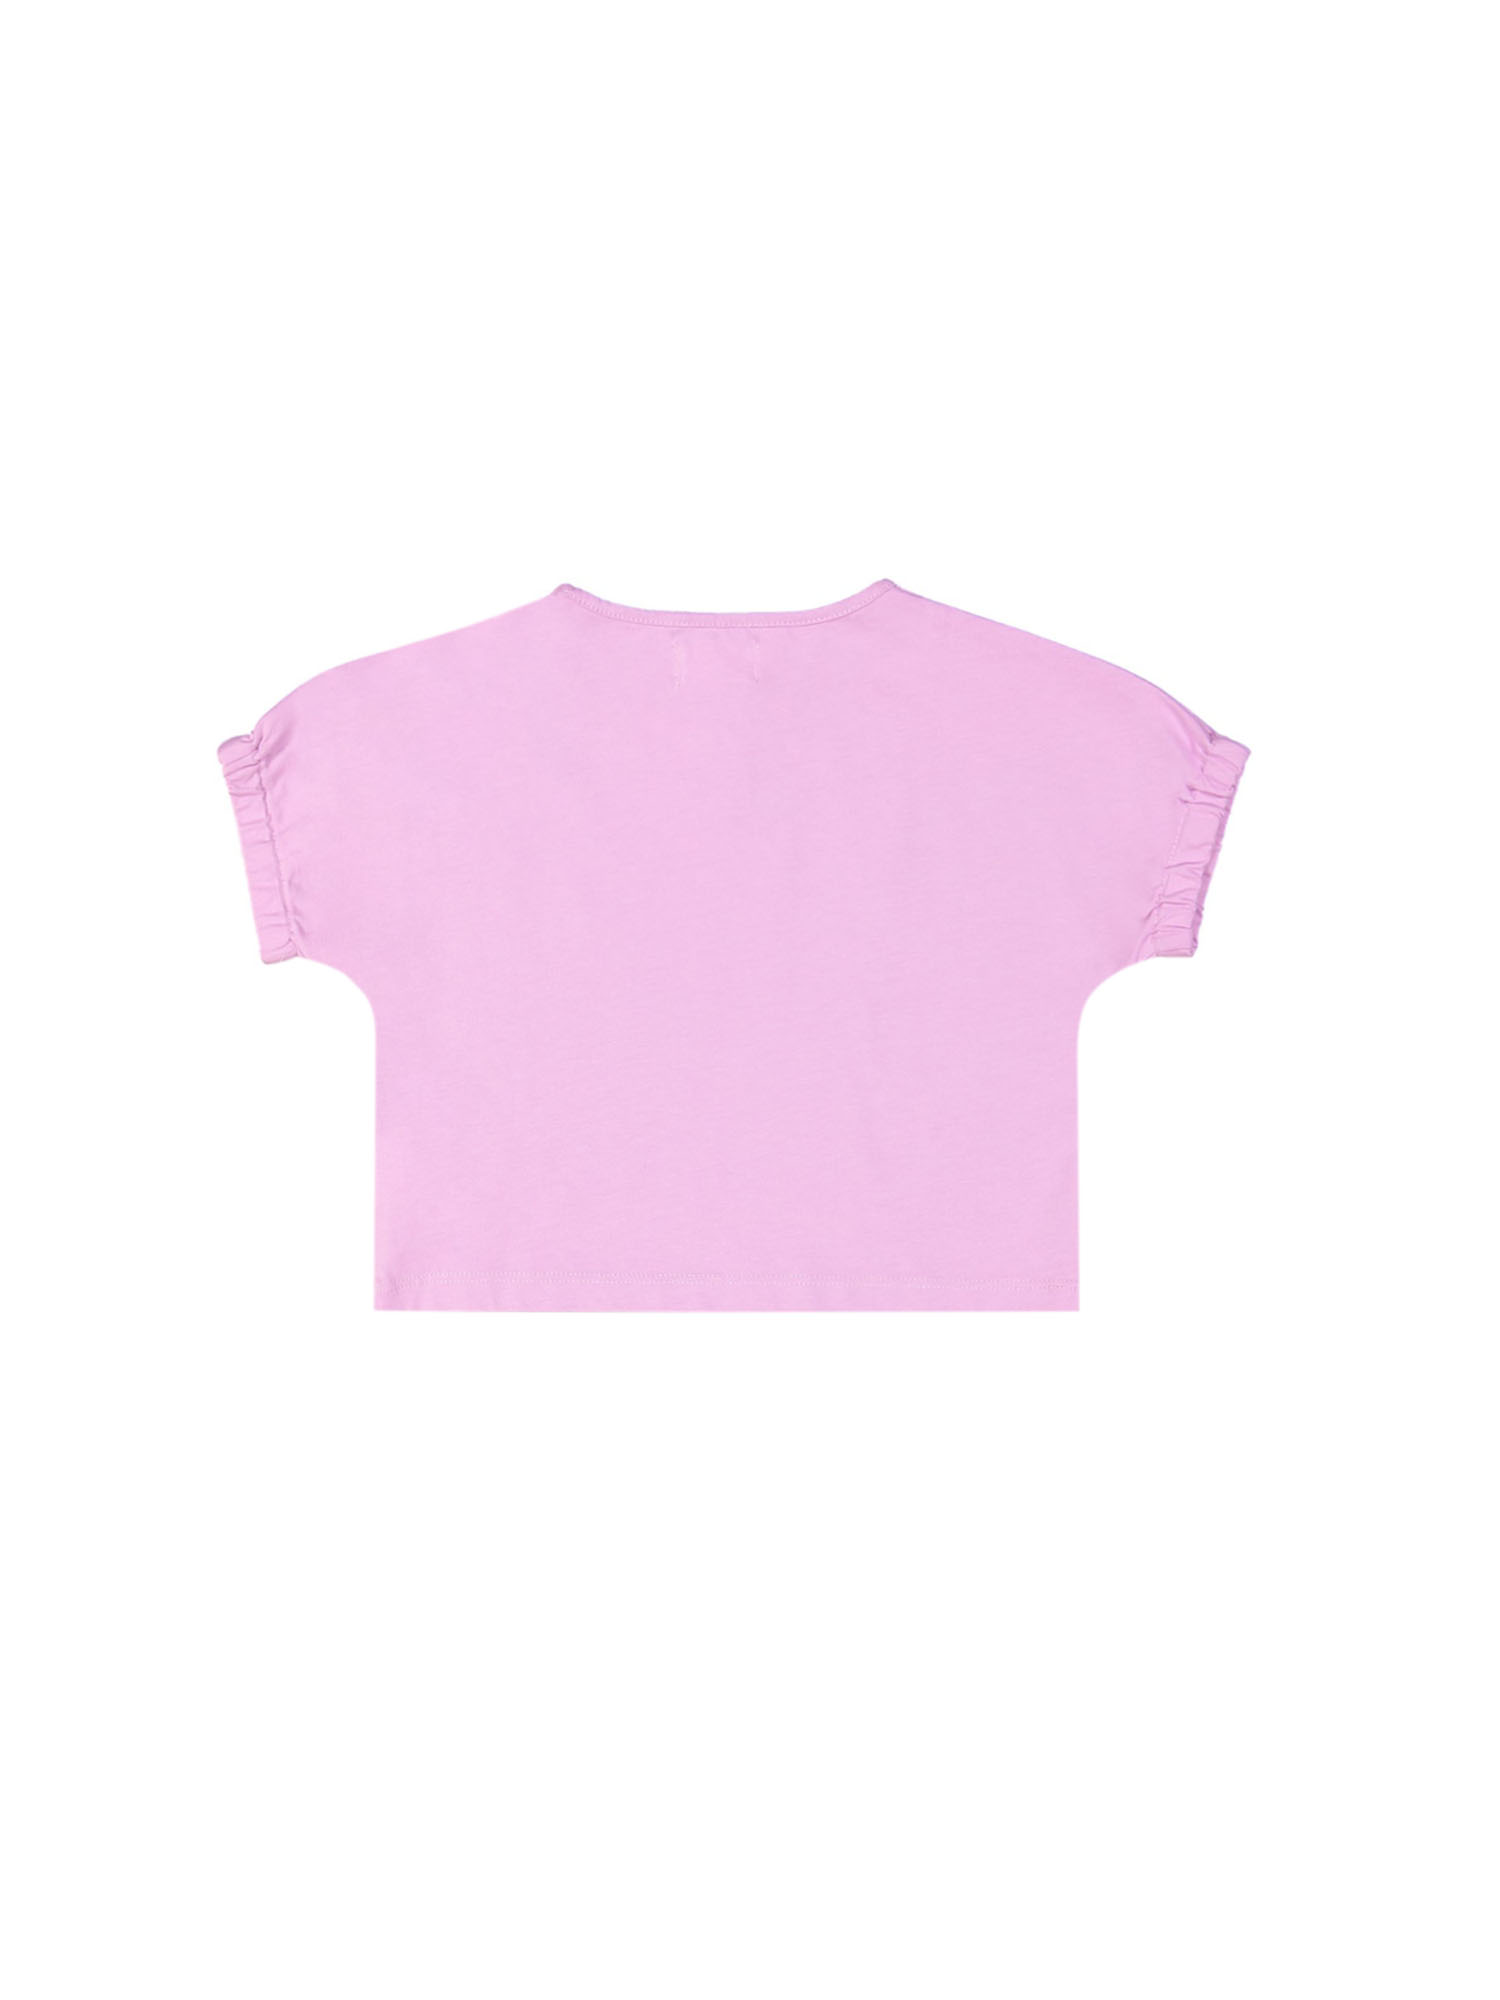 t-shirt hula hoop roze 06j